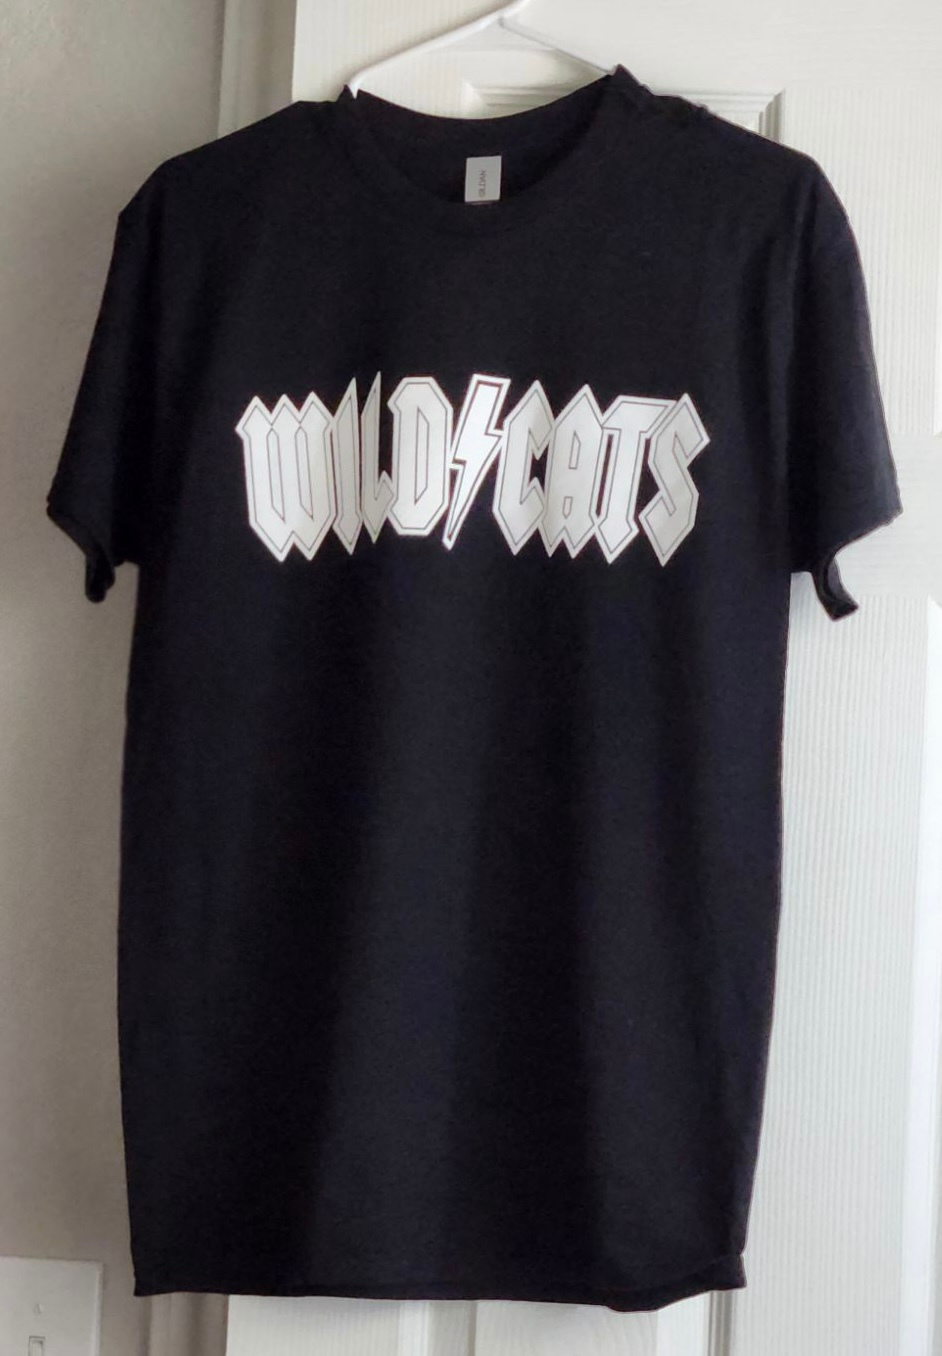 AC/DC Wildcat Black Tshirt